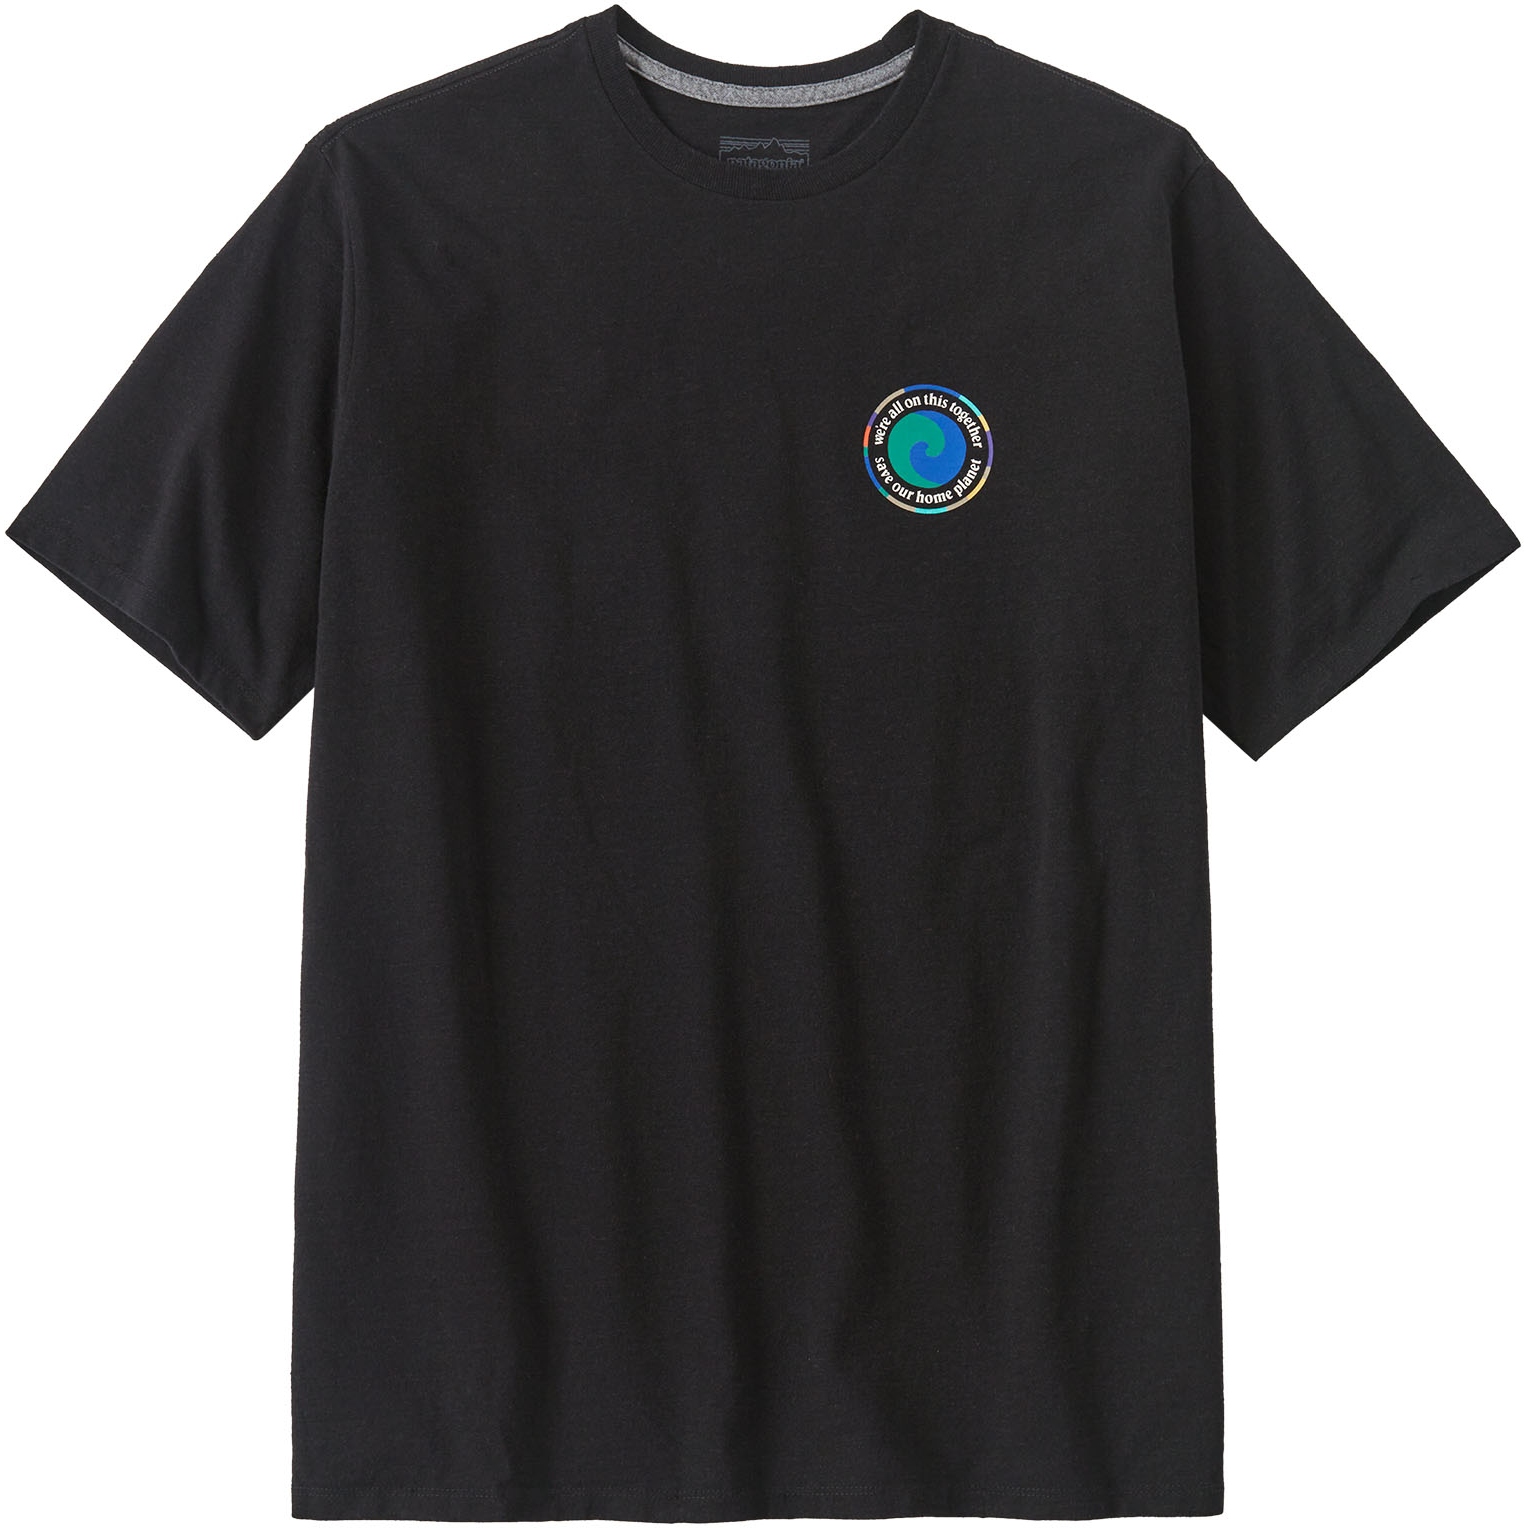 Produktbild von Patagonia Unity Fitz Responsibili-Tee T-Shirt Herren - Ink Black